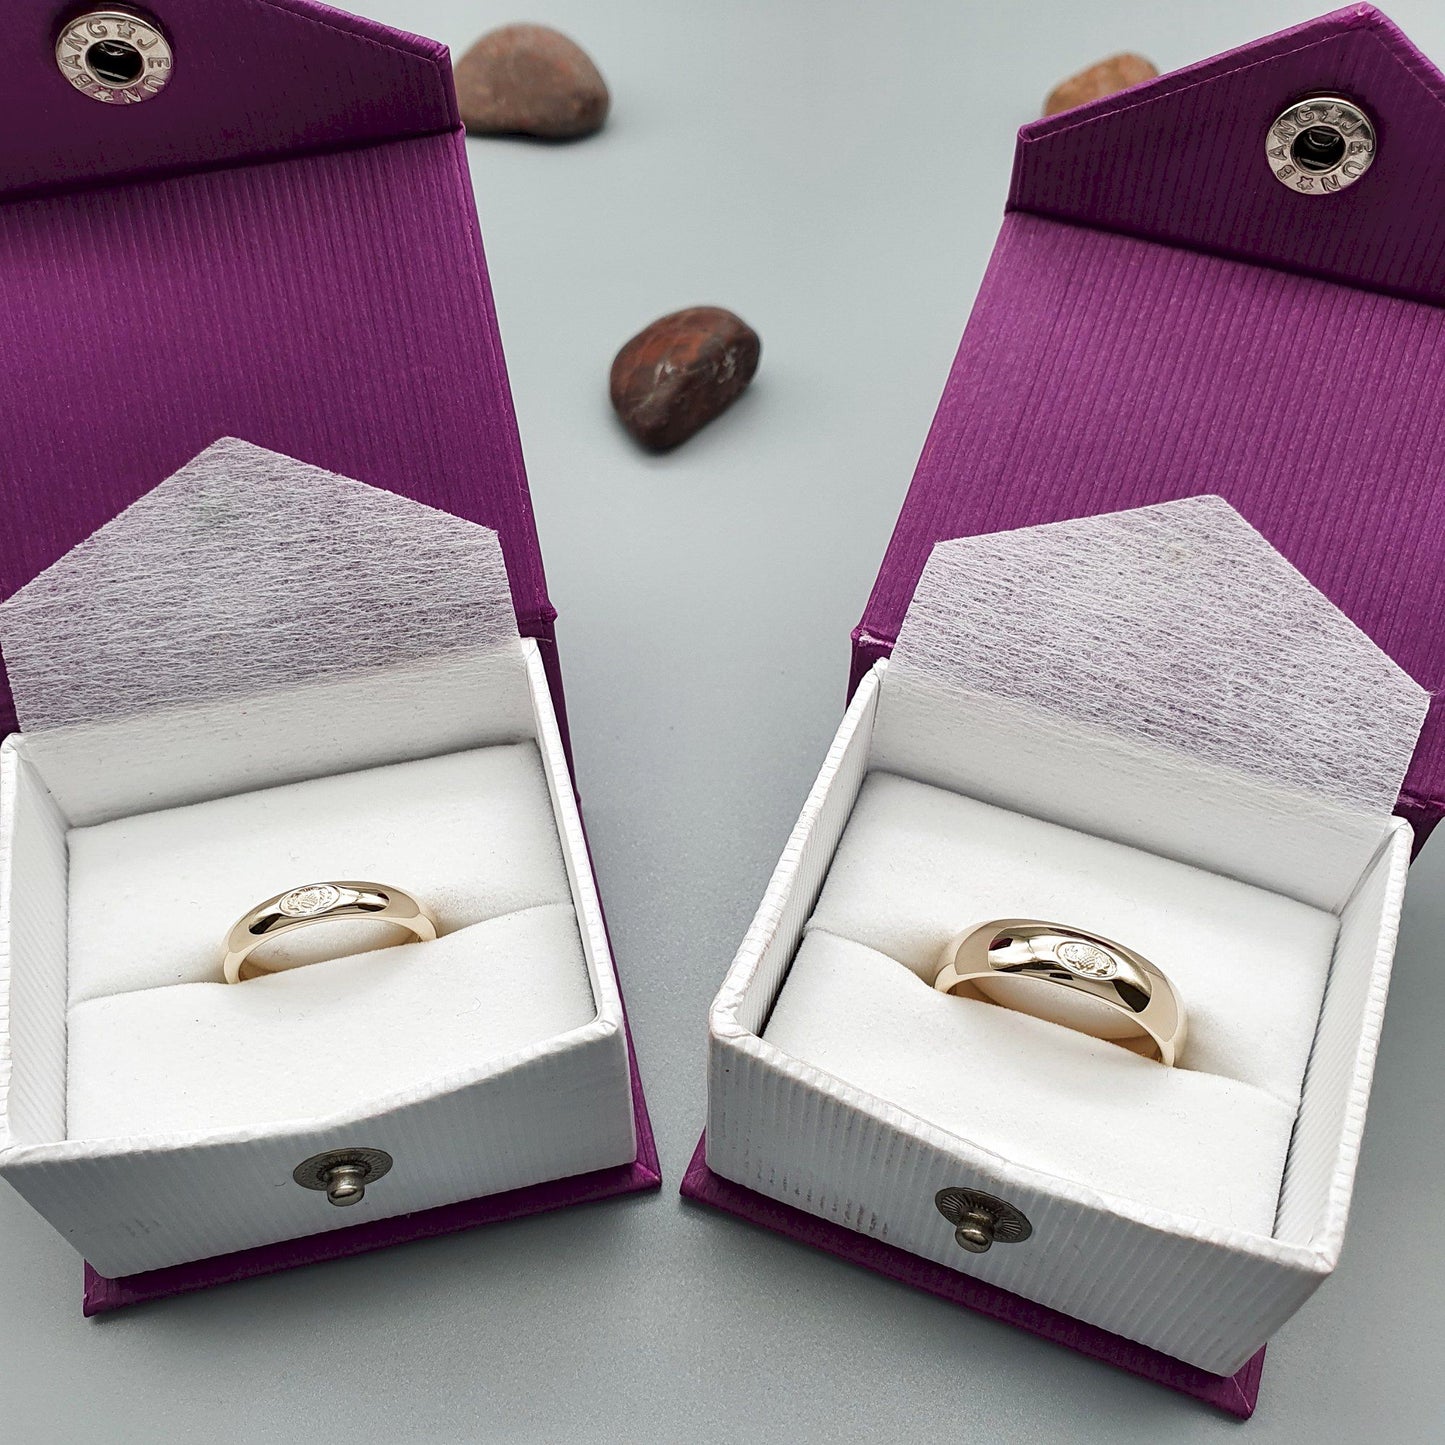 Scottish matching gold ring set, 4mm and 6mm - Gretna Green Wedding Rings